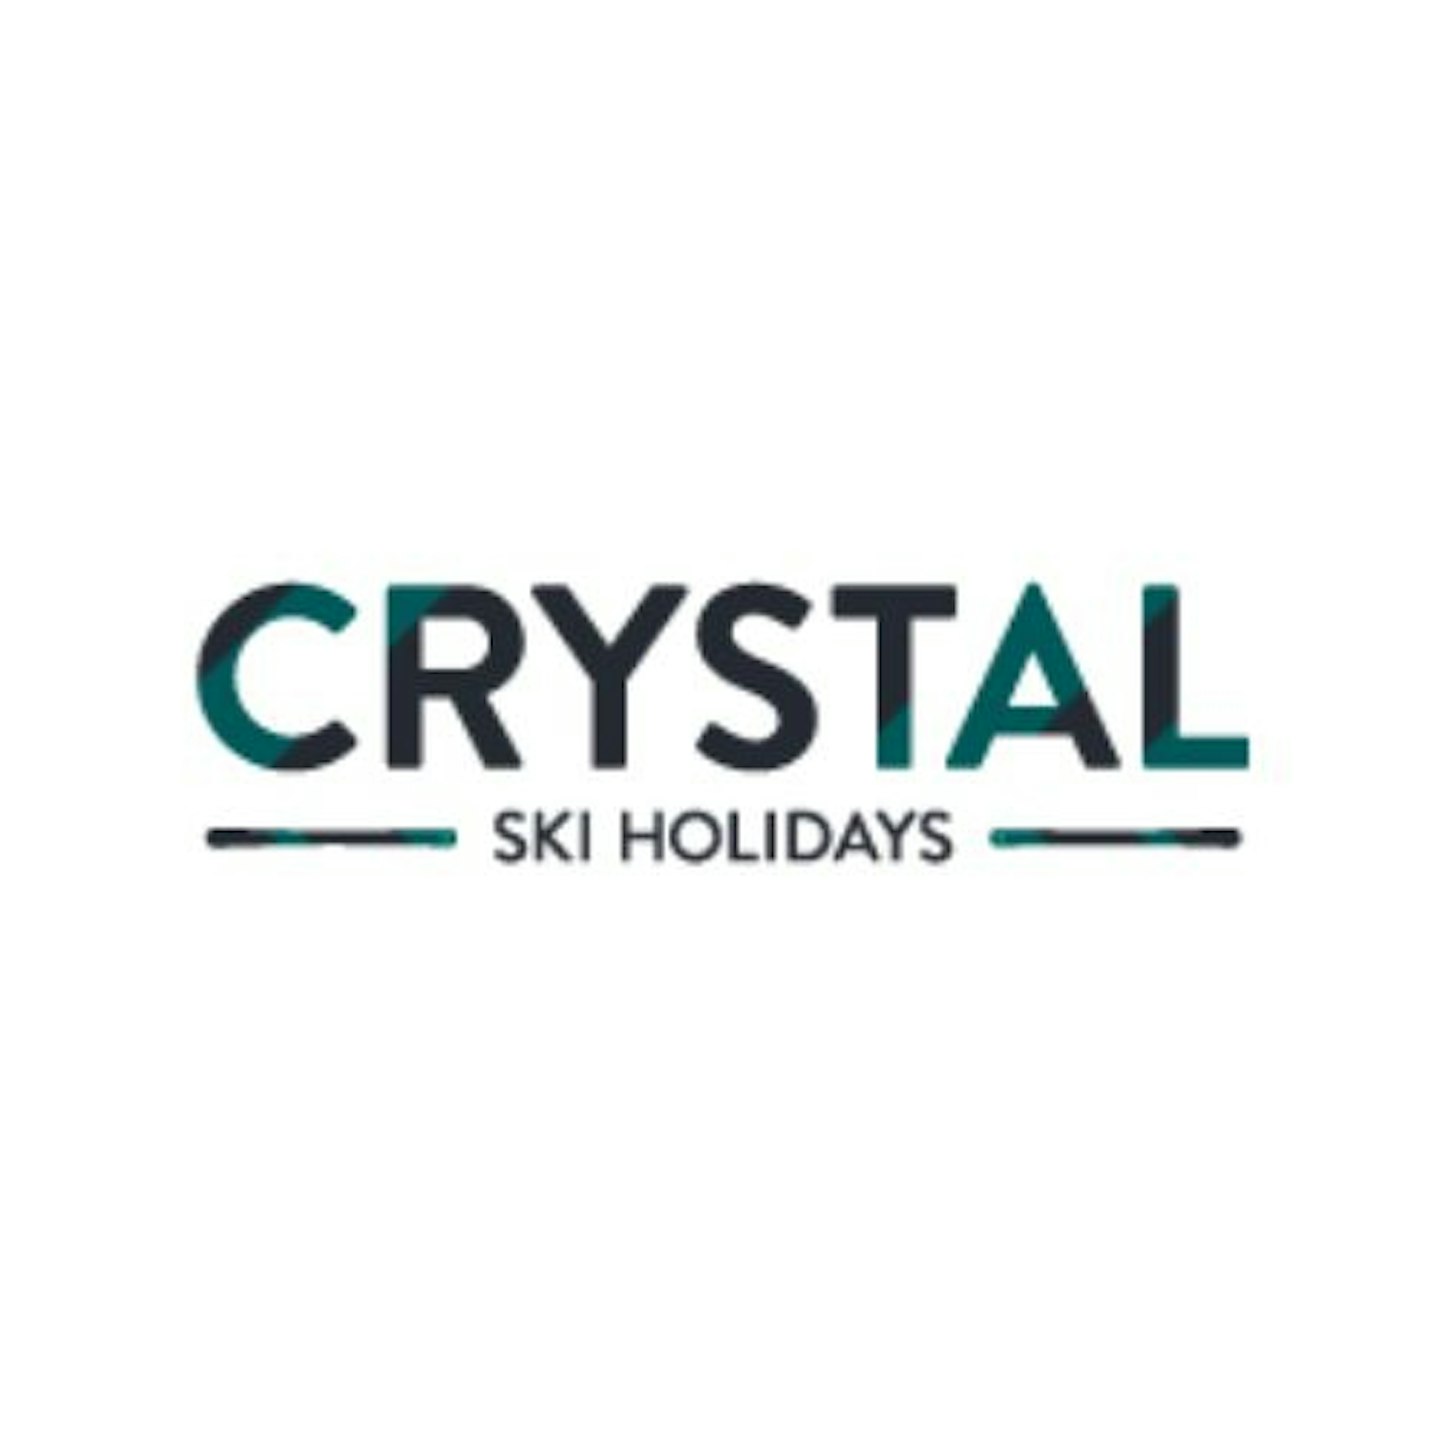 Crystal Ski Holidays logo